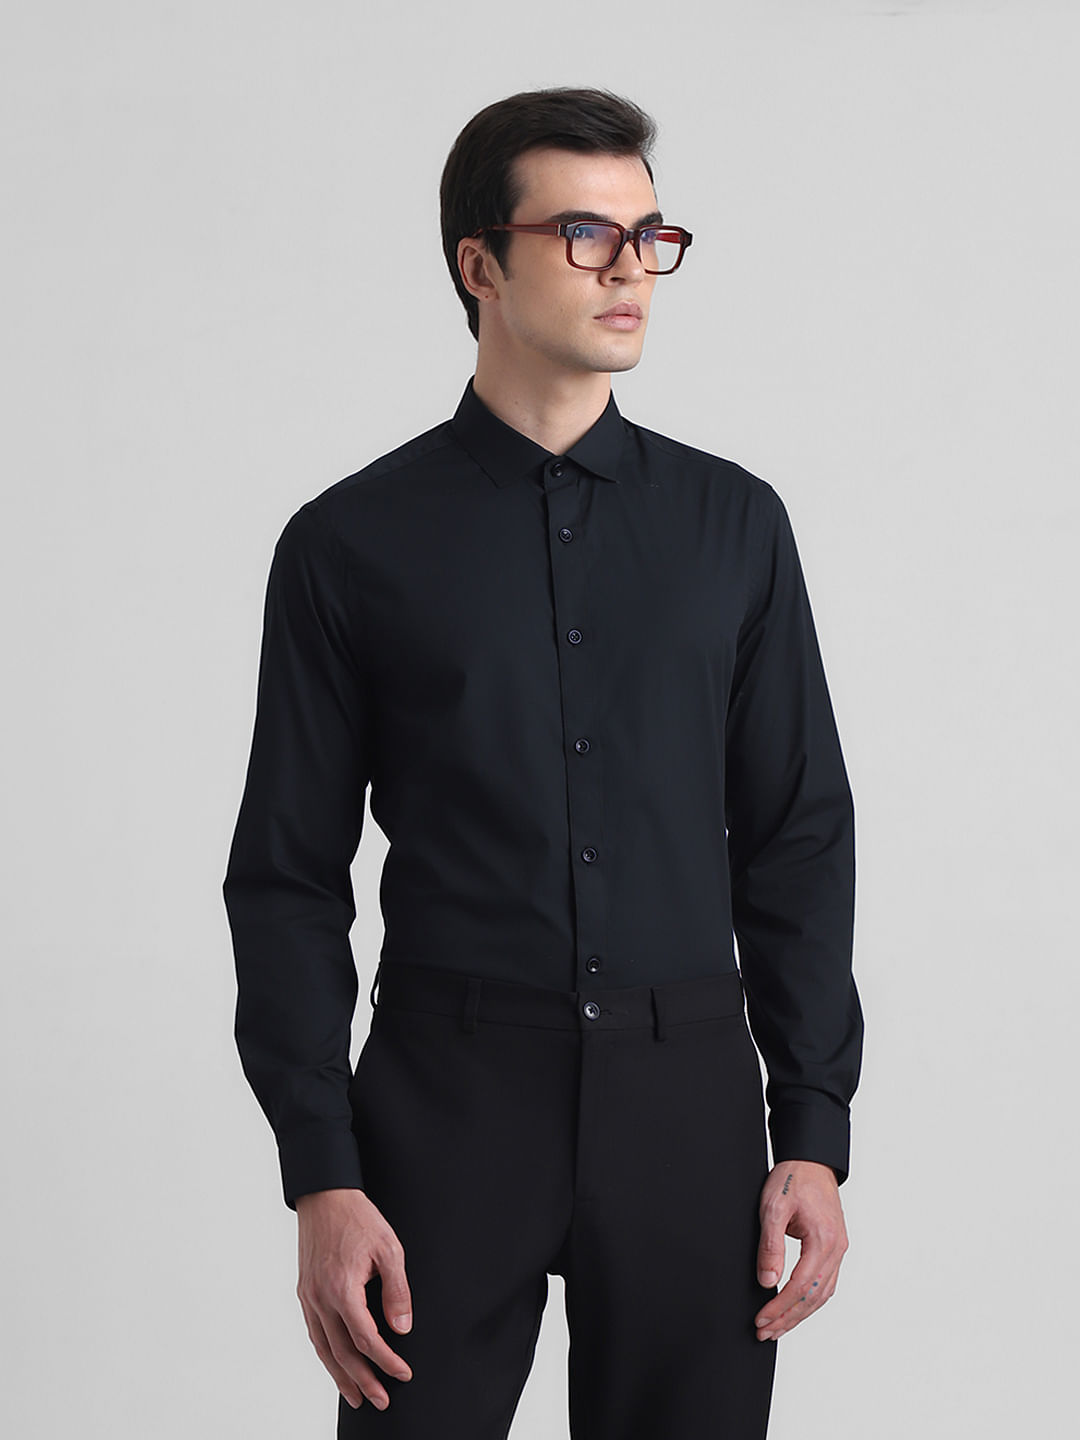 Formal Black Pants Matching Shirt For Men's Best Colour Combination |Black  Pant & Shirt Matching2022 - YouTube